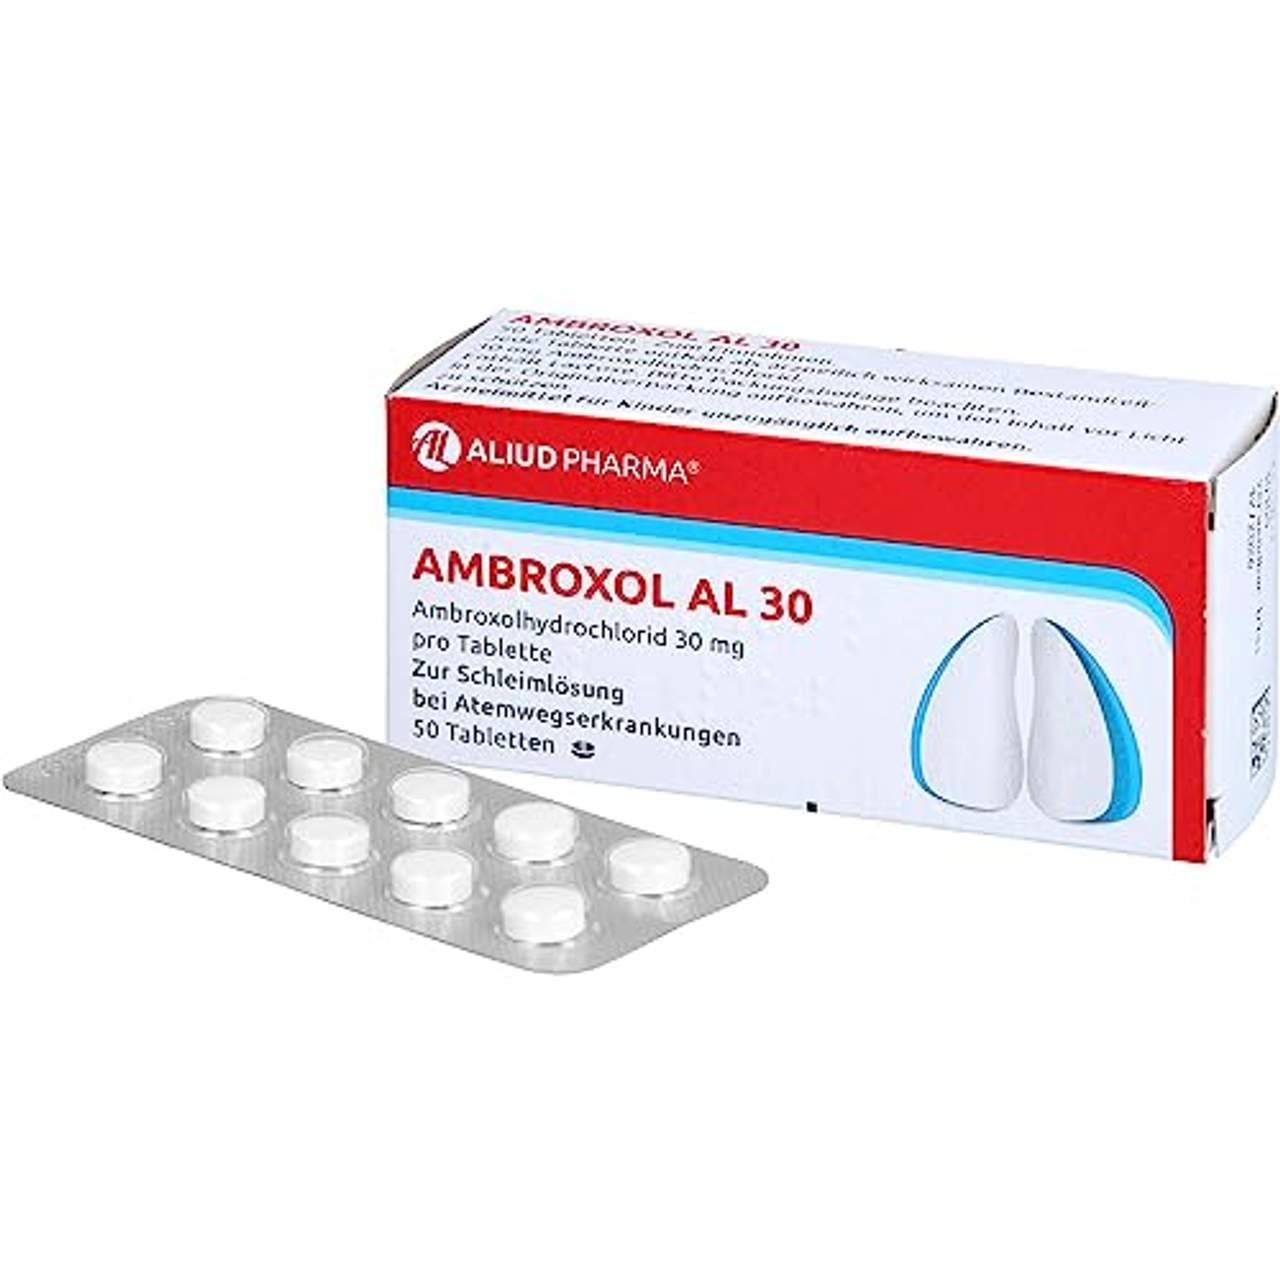 Ambroxol AL 30 Tabletten 50 St